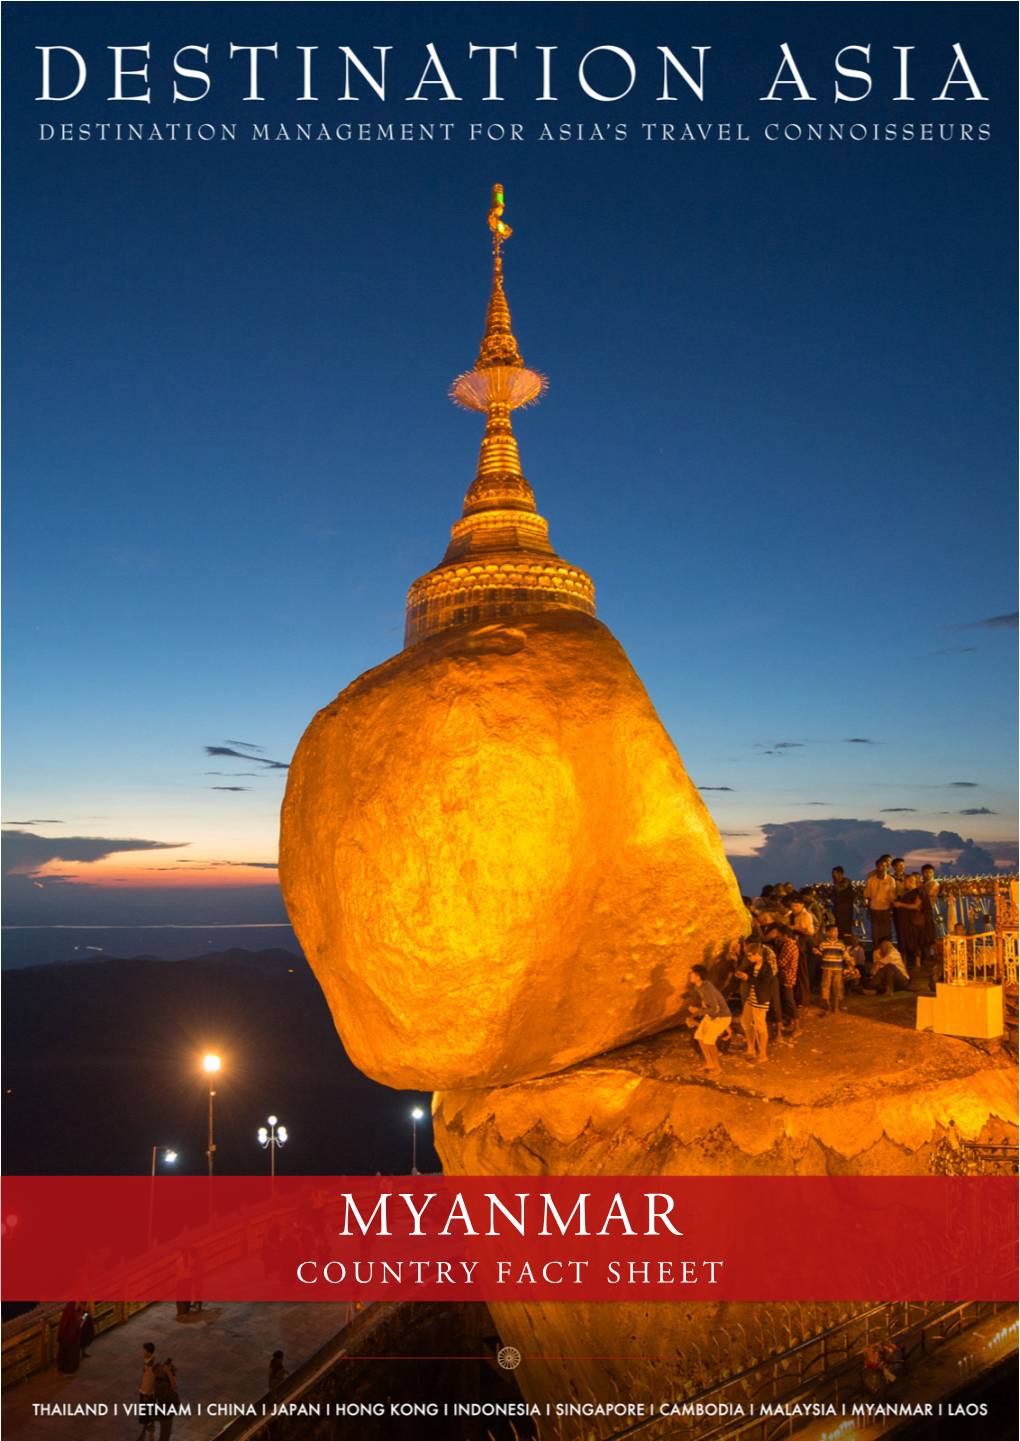 Myanmar Country Fact Sheet About Myanmar